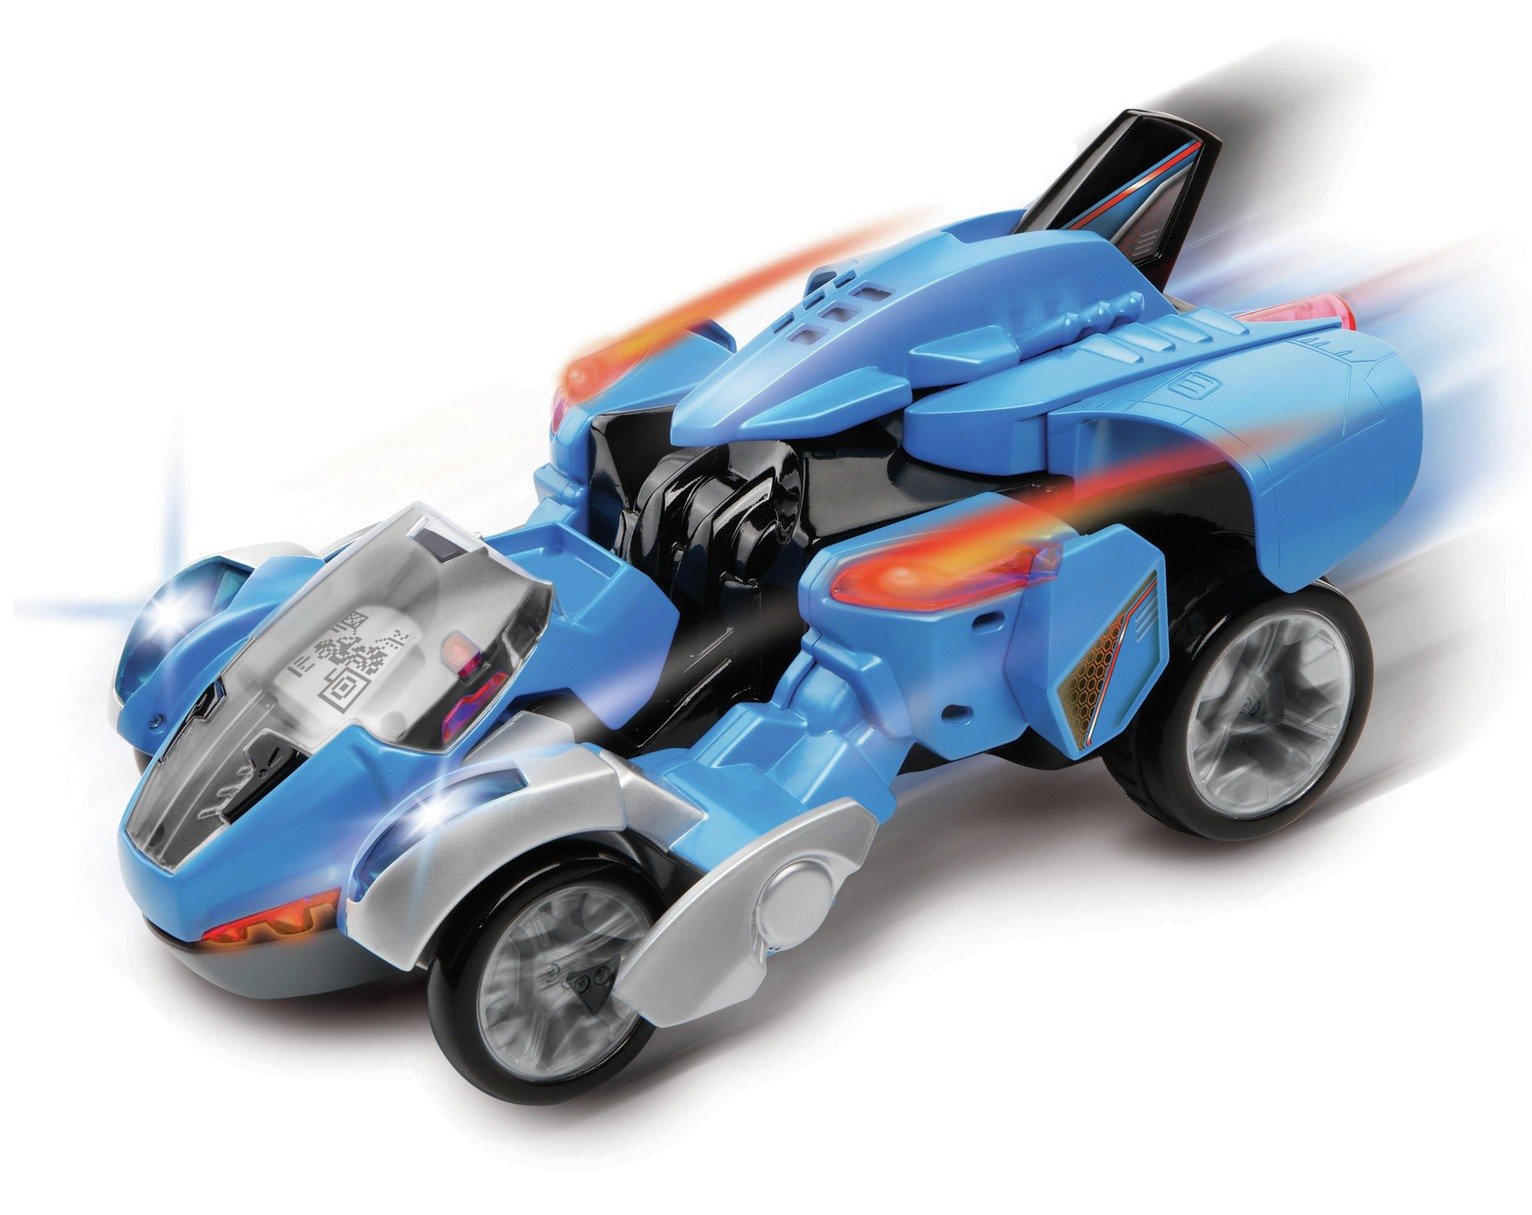 VTech Dash The Rex Activity Toy Review